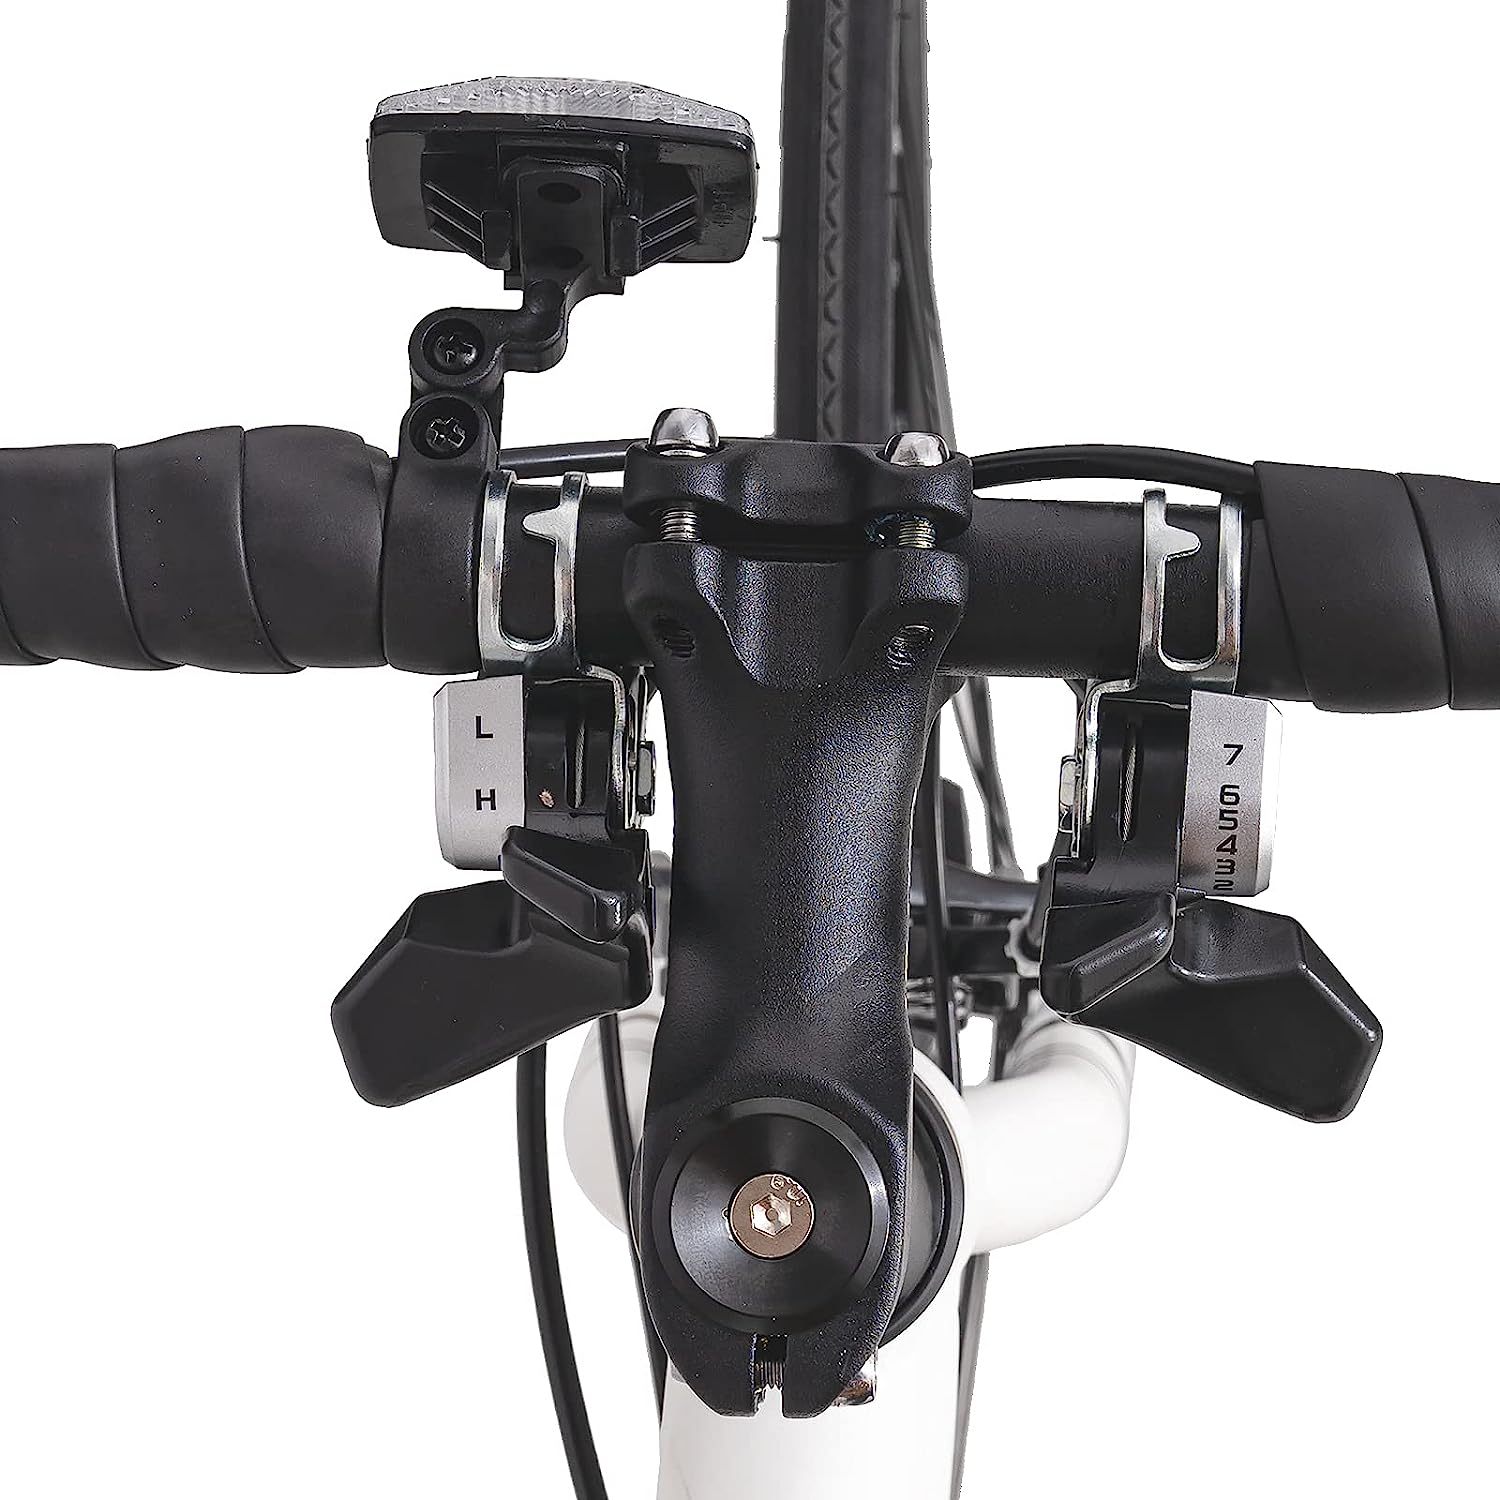 Hiland Road Bike,Shimano 14 Speeds,Light Weight Aluminum Frame,700C Racing Bike for Men - image 5 of 8